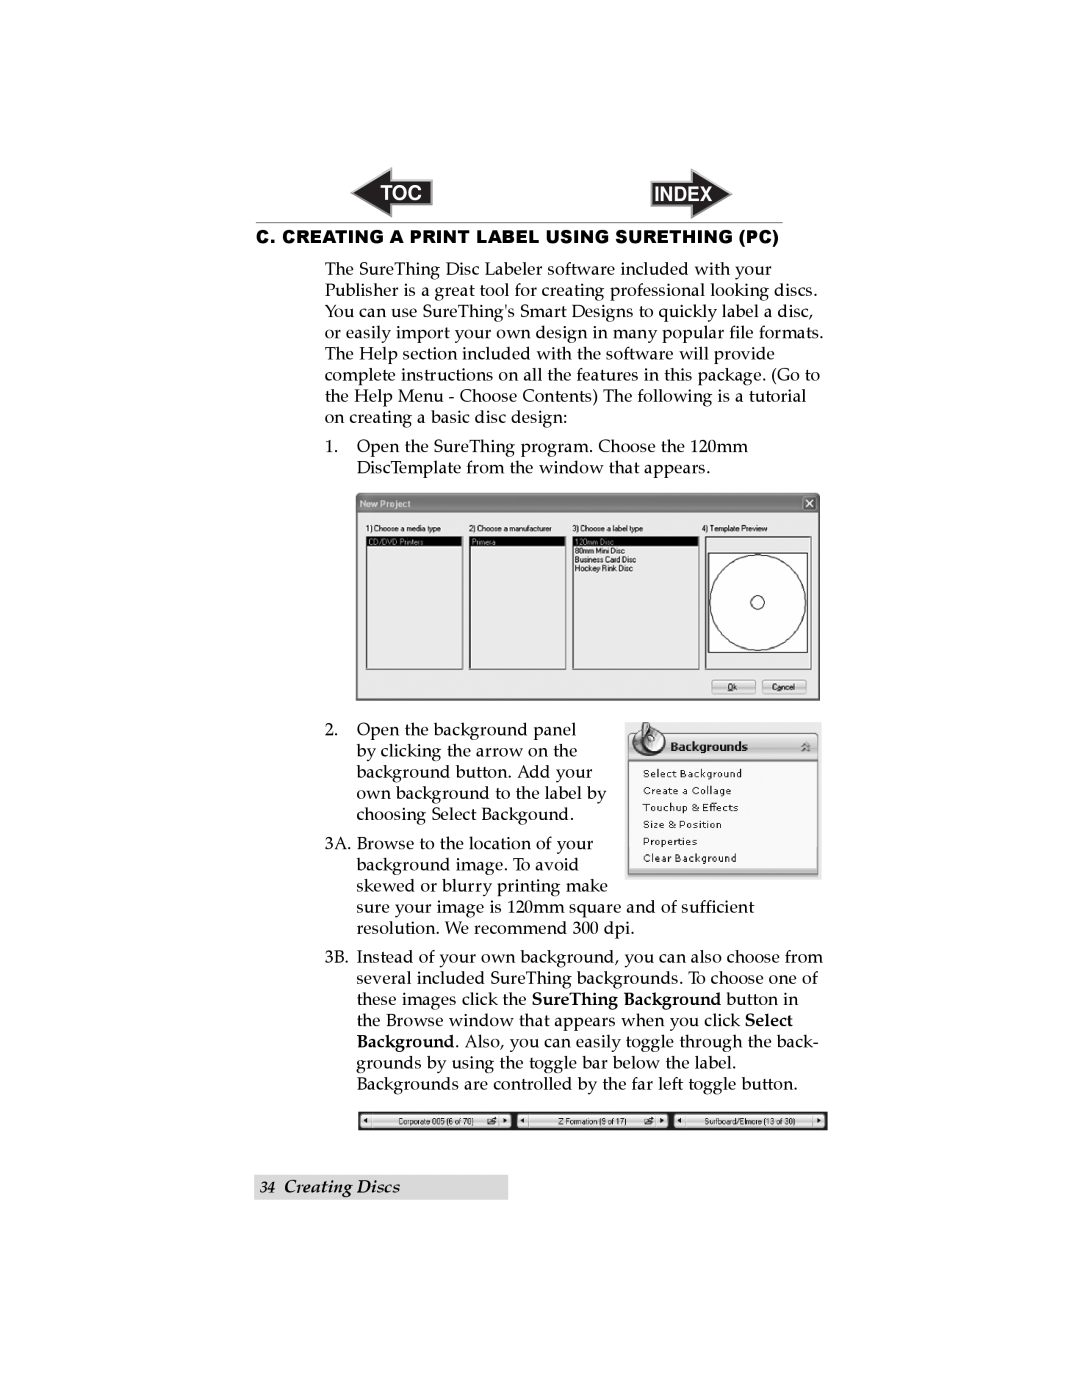 Primera Technology 032910-511262 user manual C. Creating A Print Label Using Surething Pc, Creating Discs, Index 